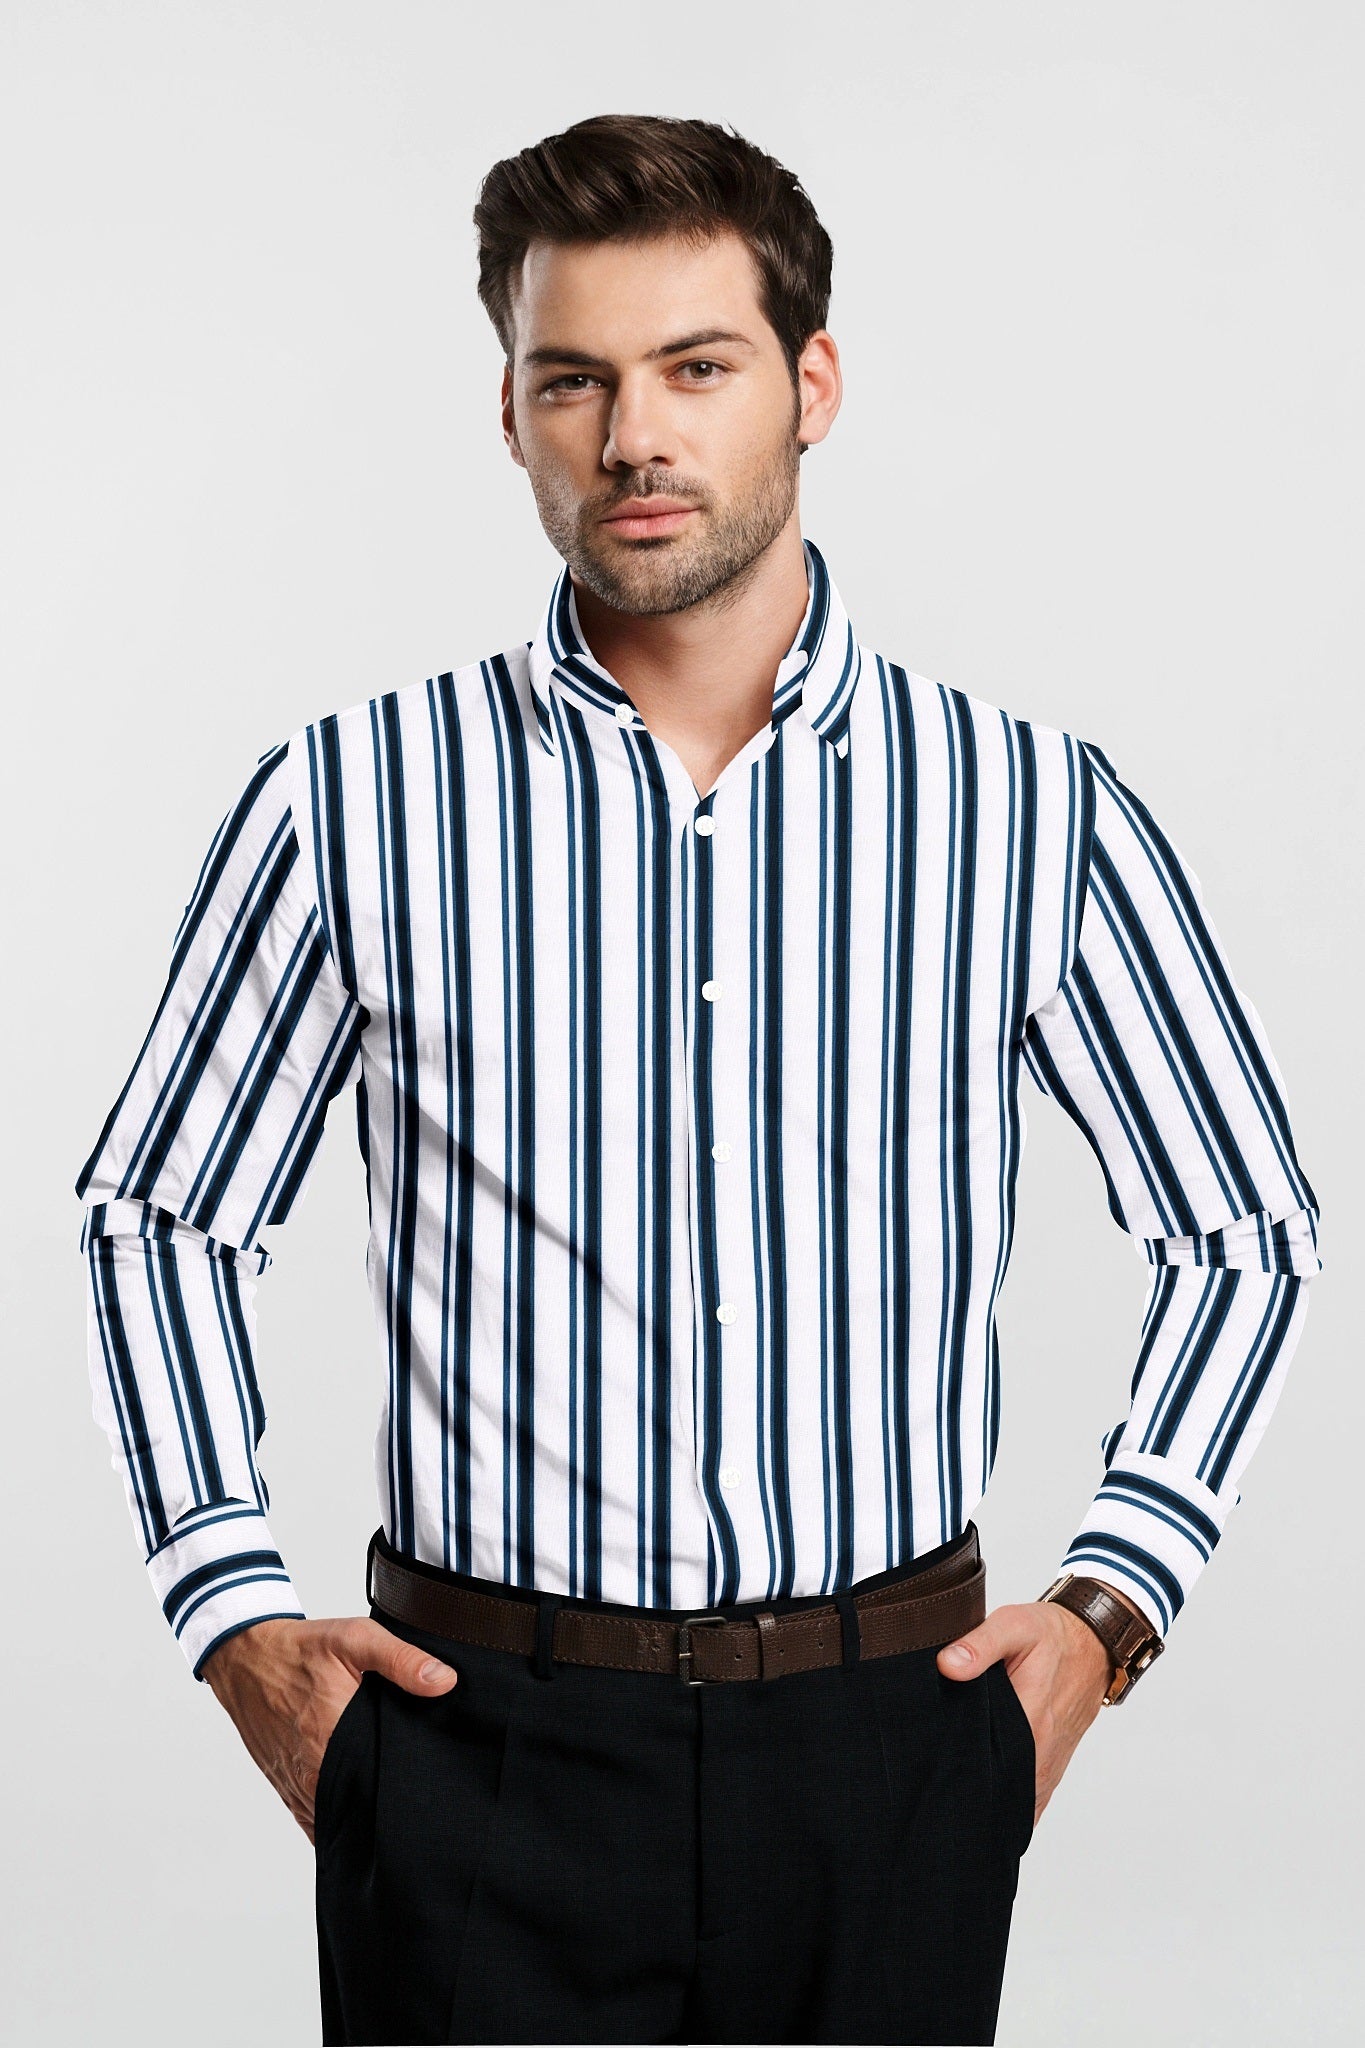 White and Vallarta blue Stripes Cotton Shirt